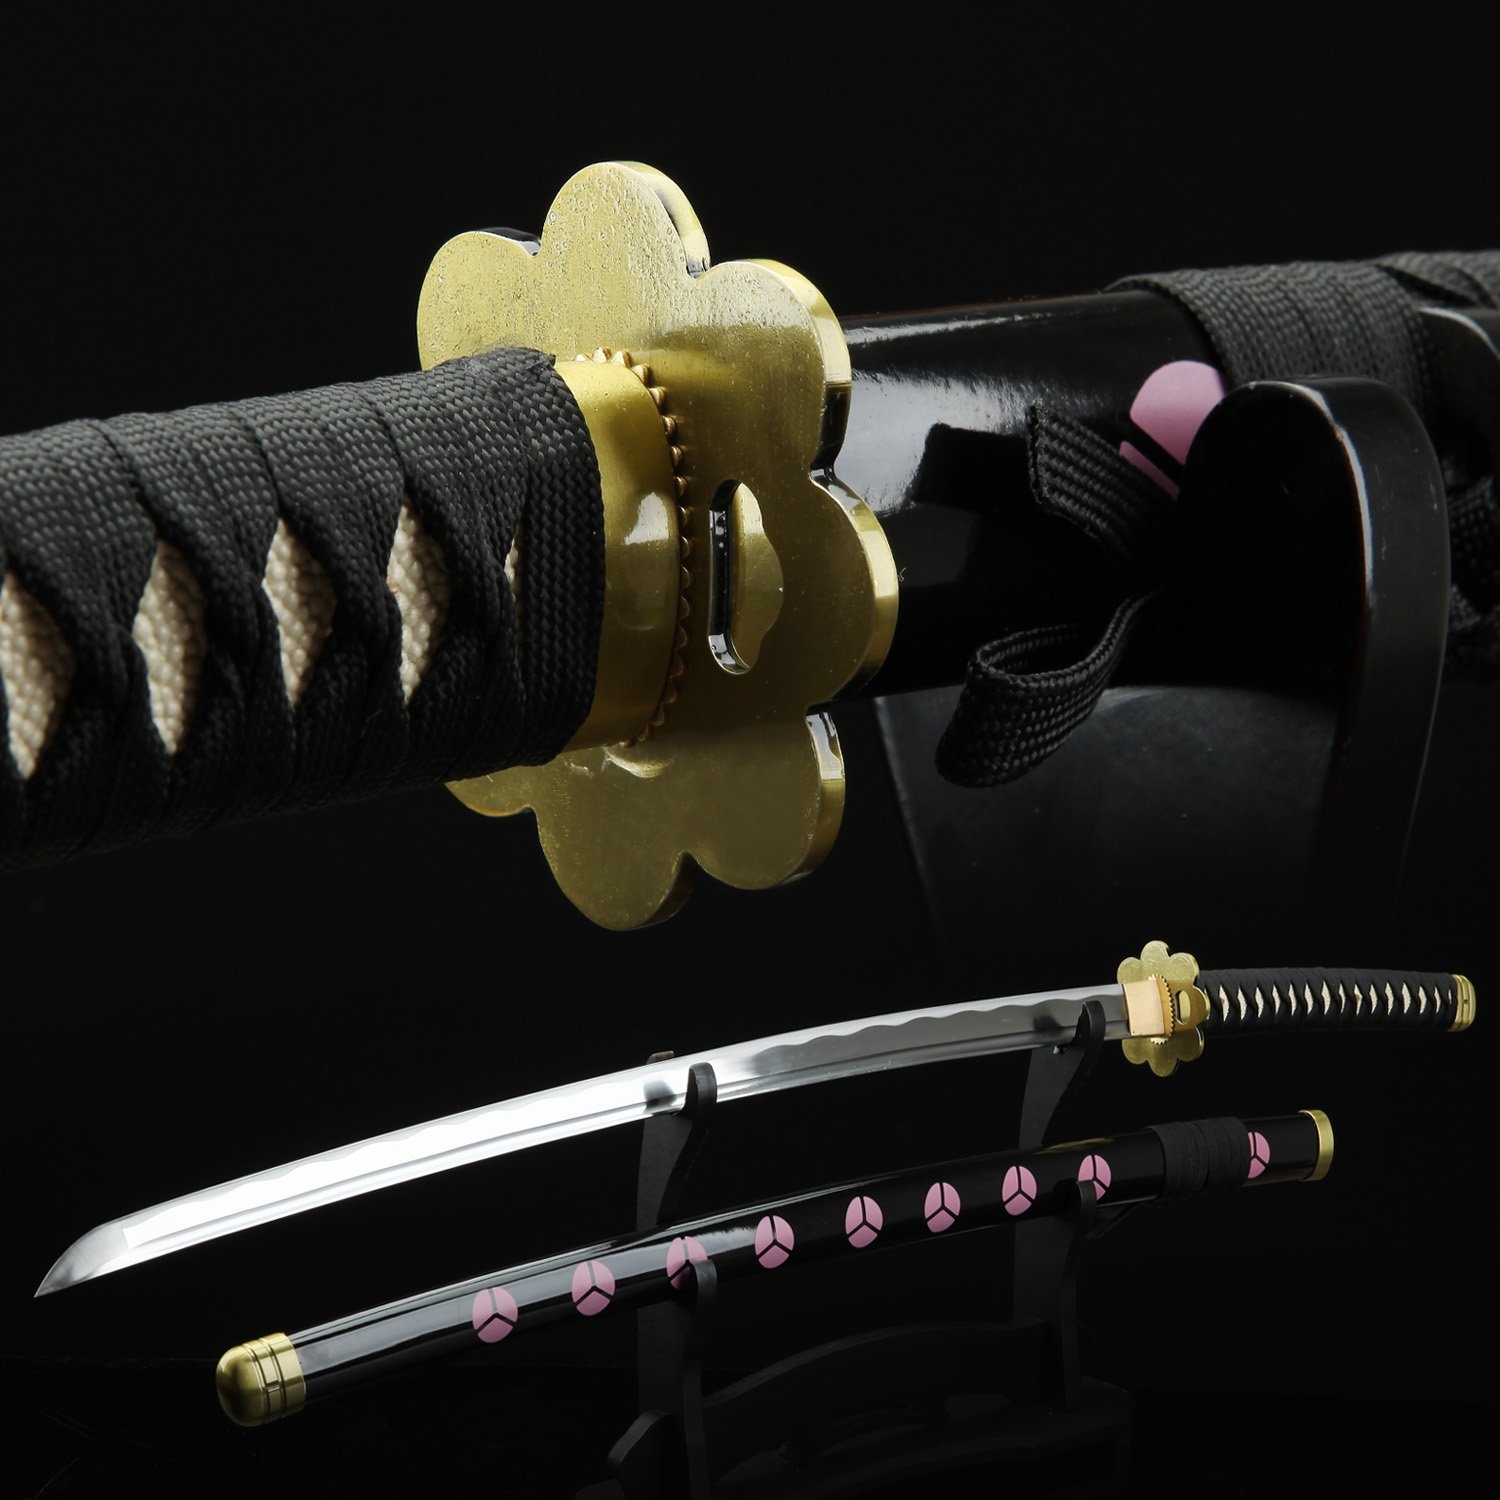 Zoro Sword  One Piece Roronoa Zoro Yubashiri Katana Samurai Sword Replica  With Black Scabbard - TrueKatana